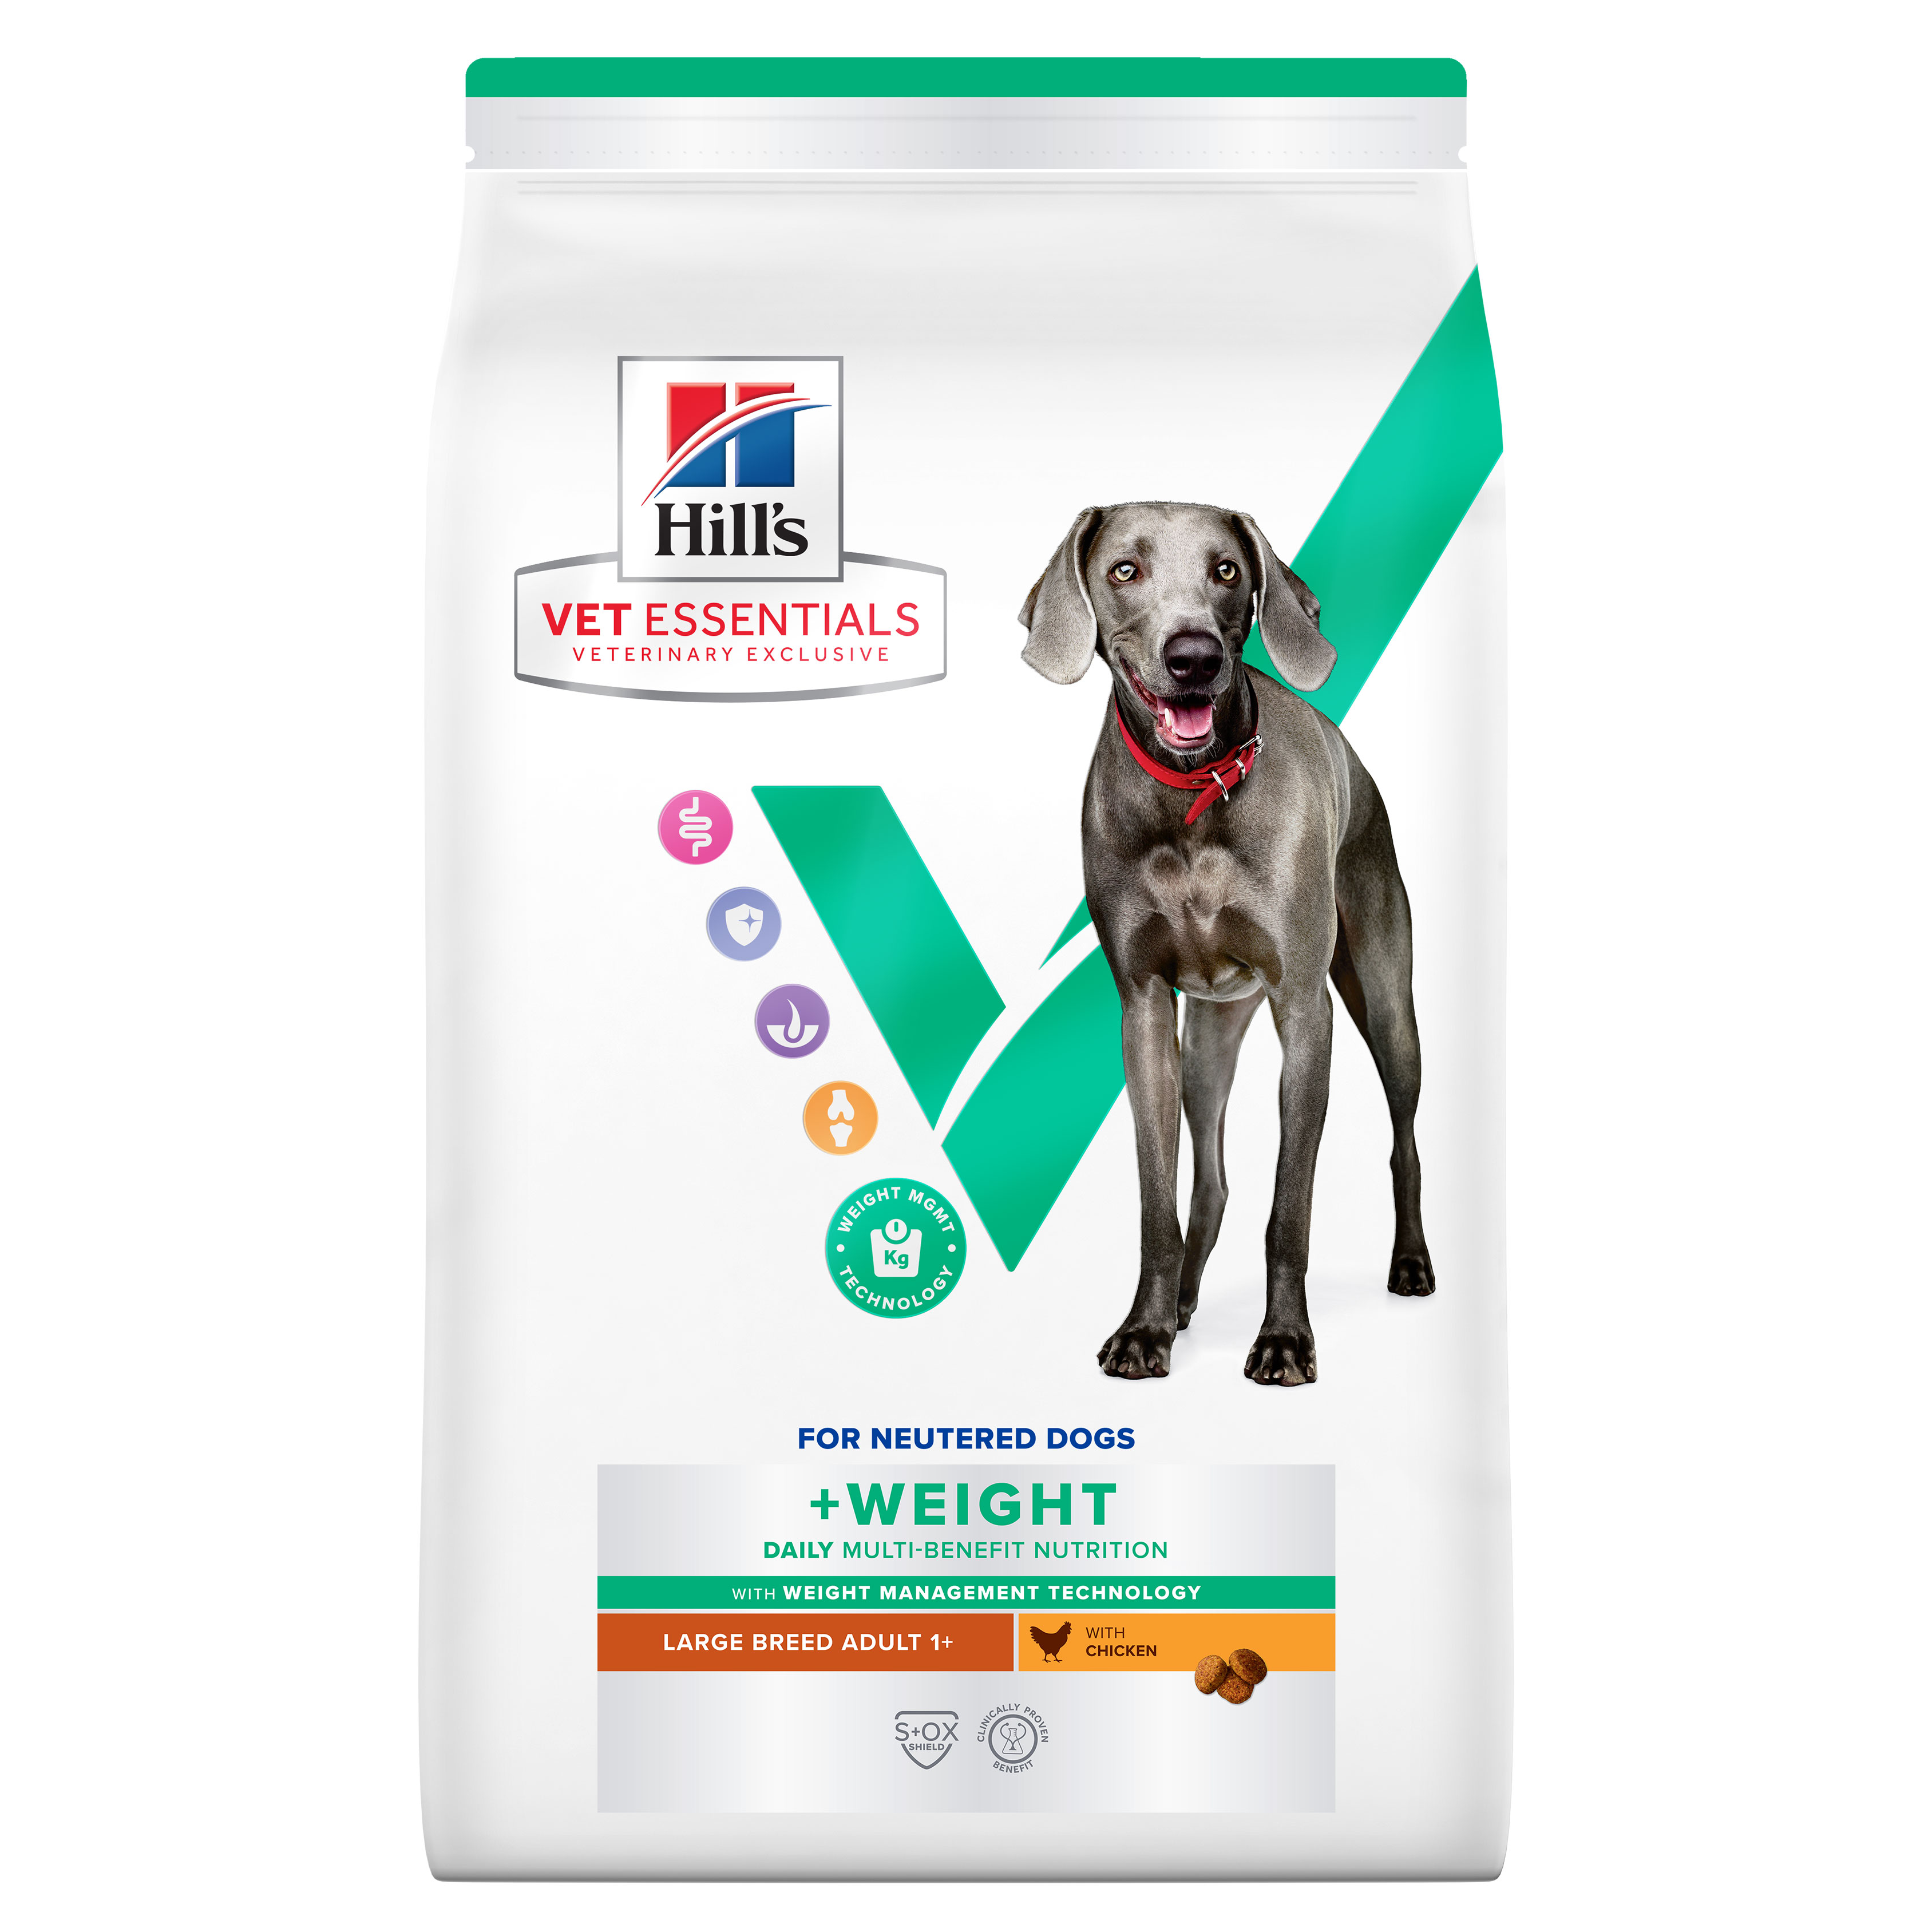 Hill's Vet Essentials מולטי בנפיט כלב בוגר גזע גדול, שמירה על המשקל, 14 ק"ג